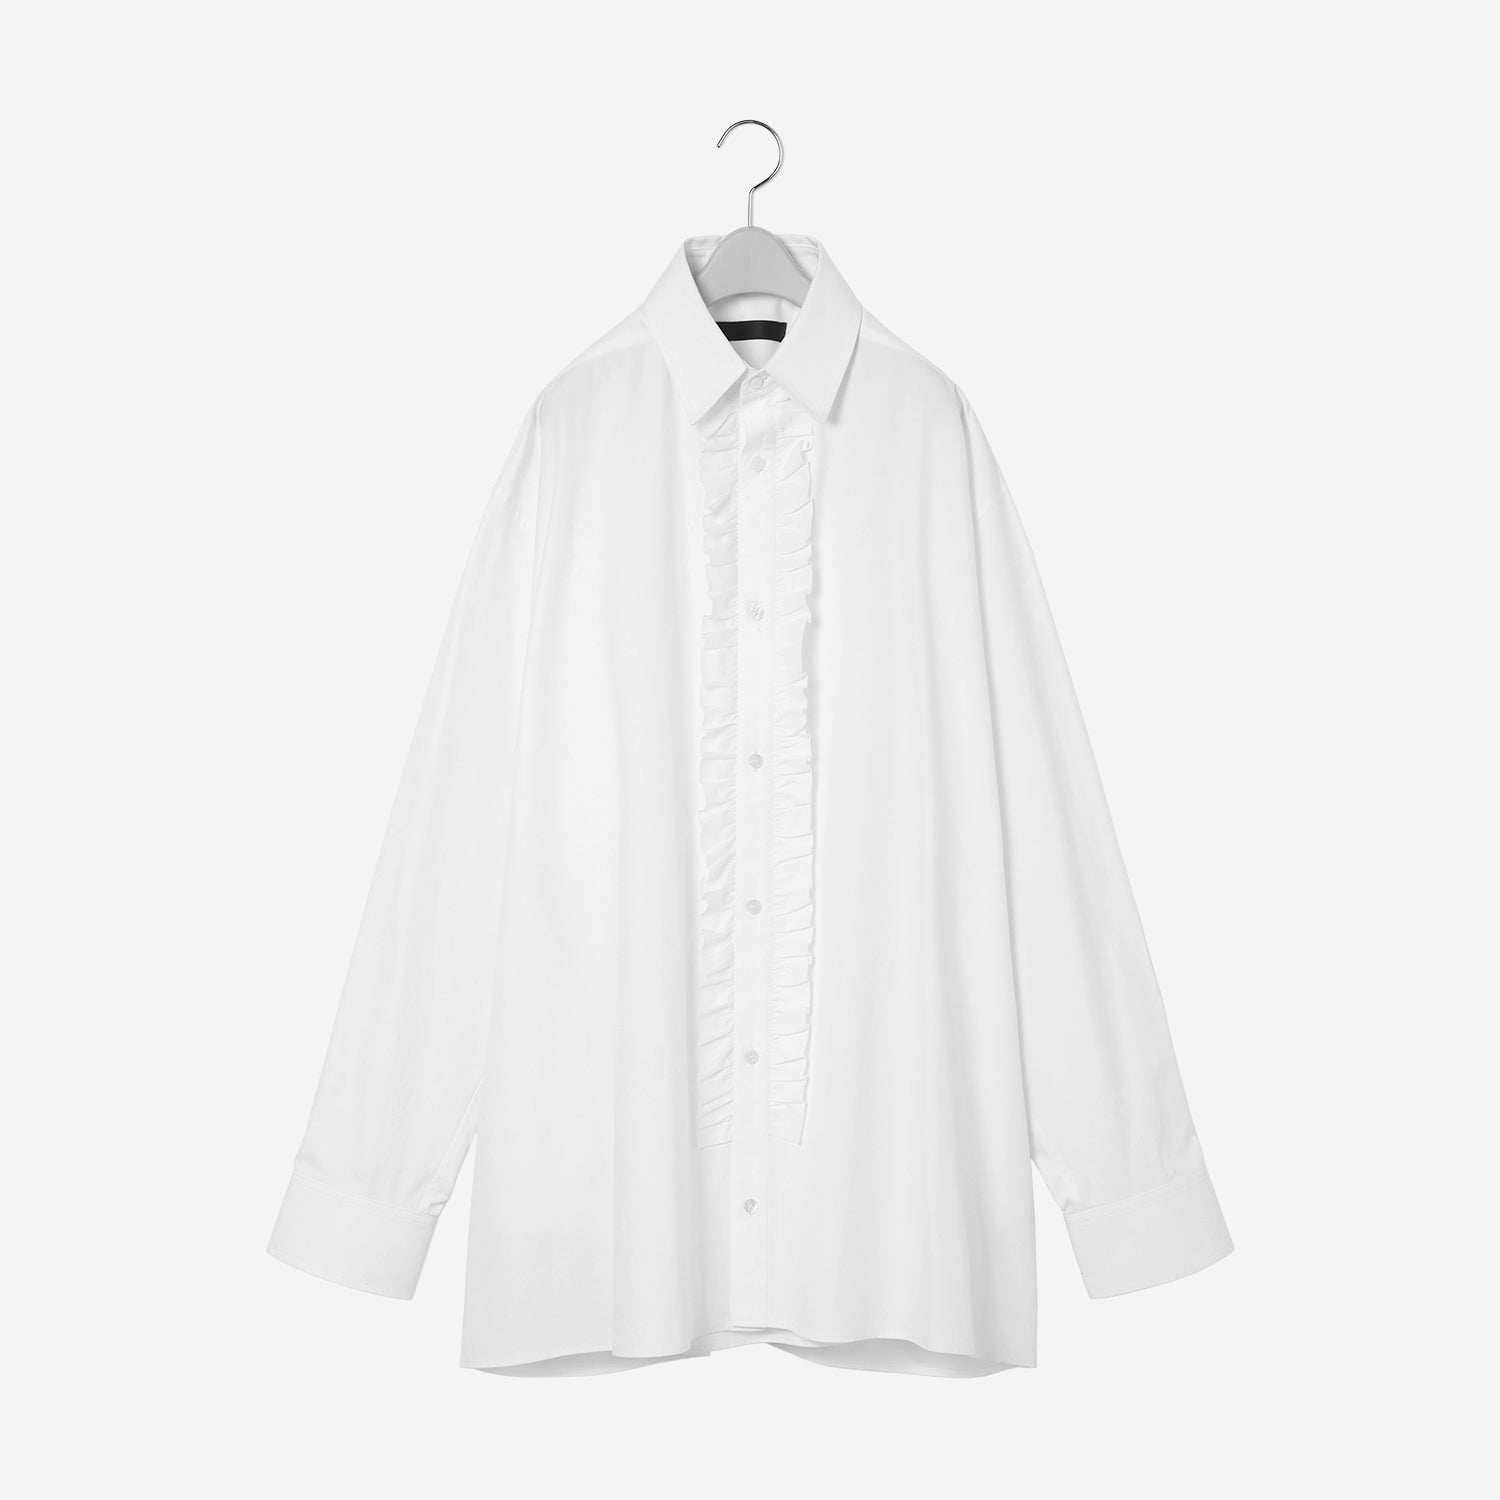 Oversized Renaissance Shirt / white